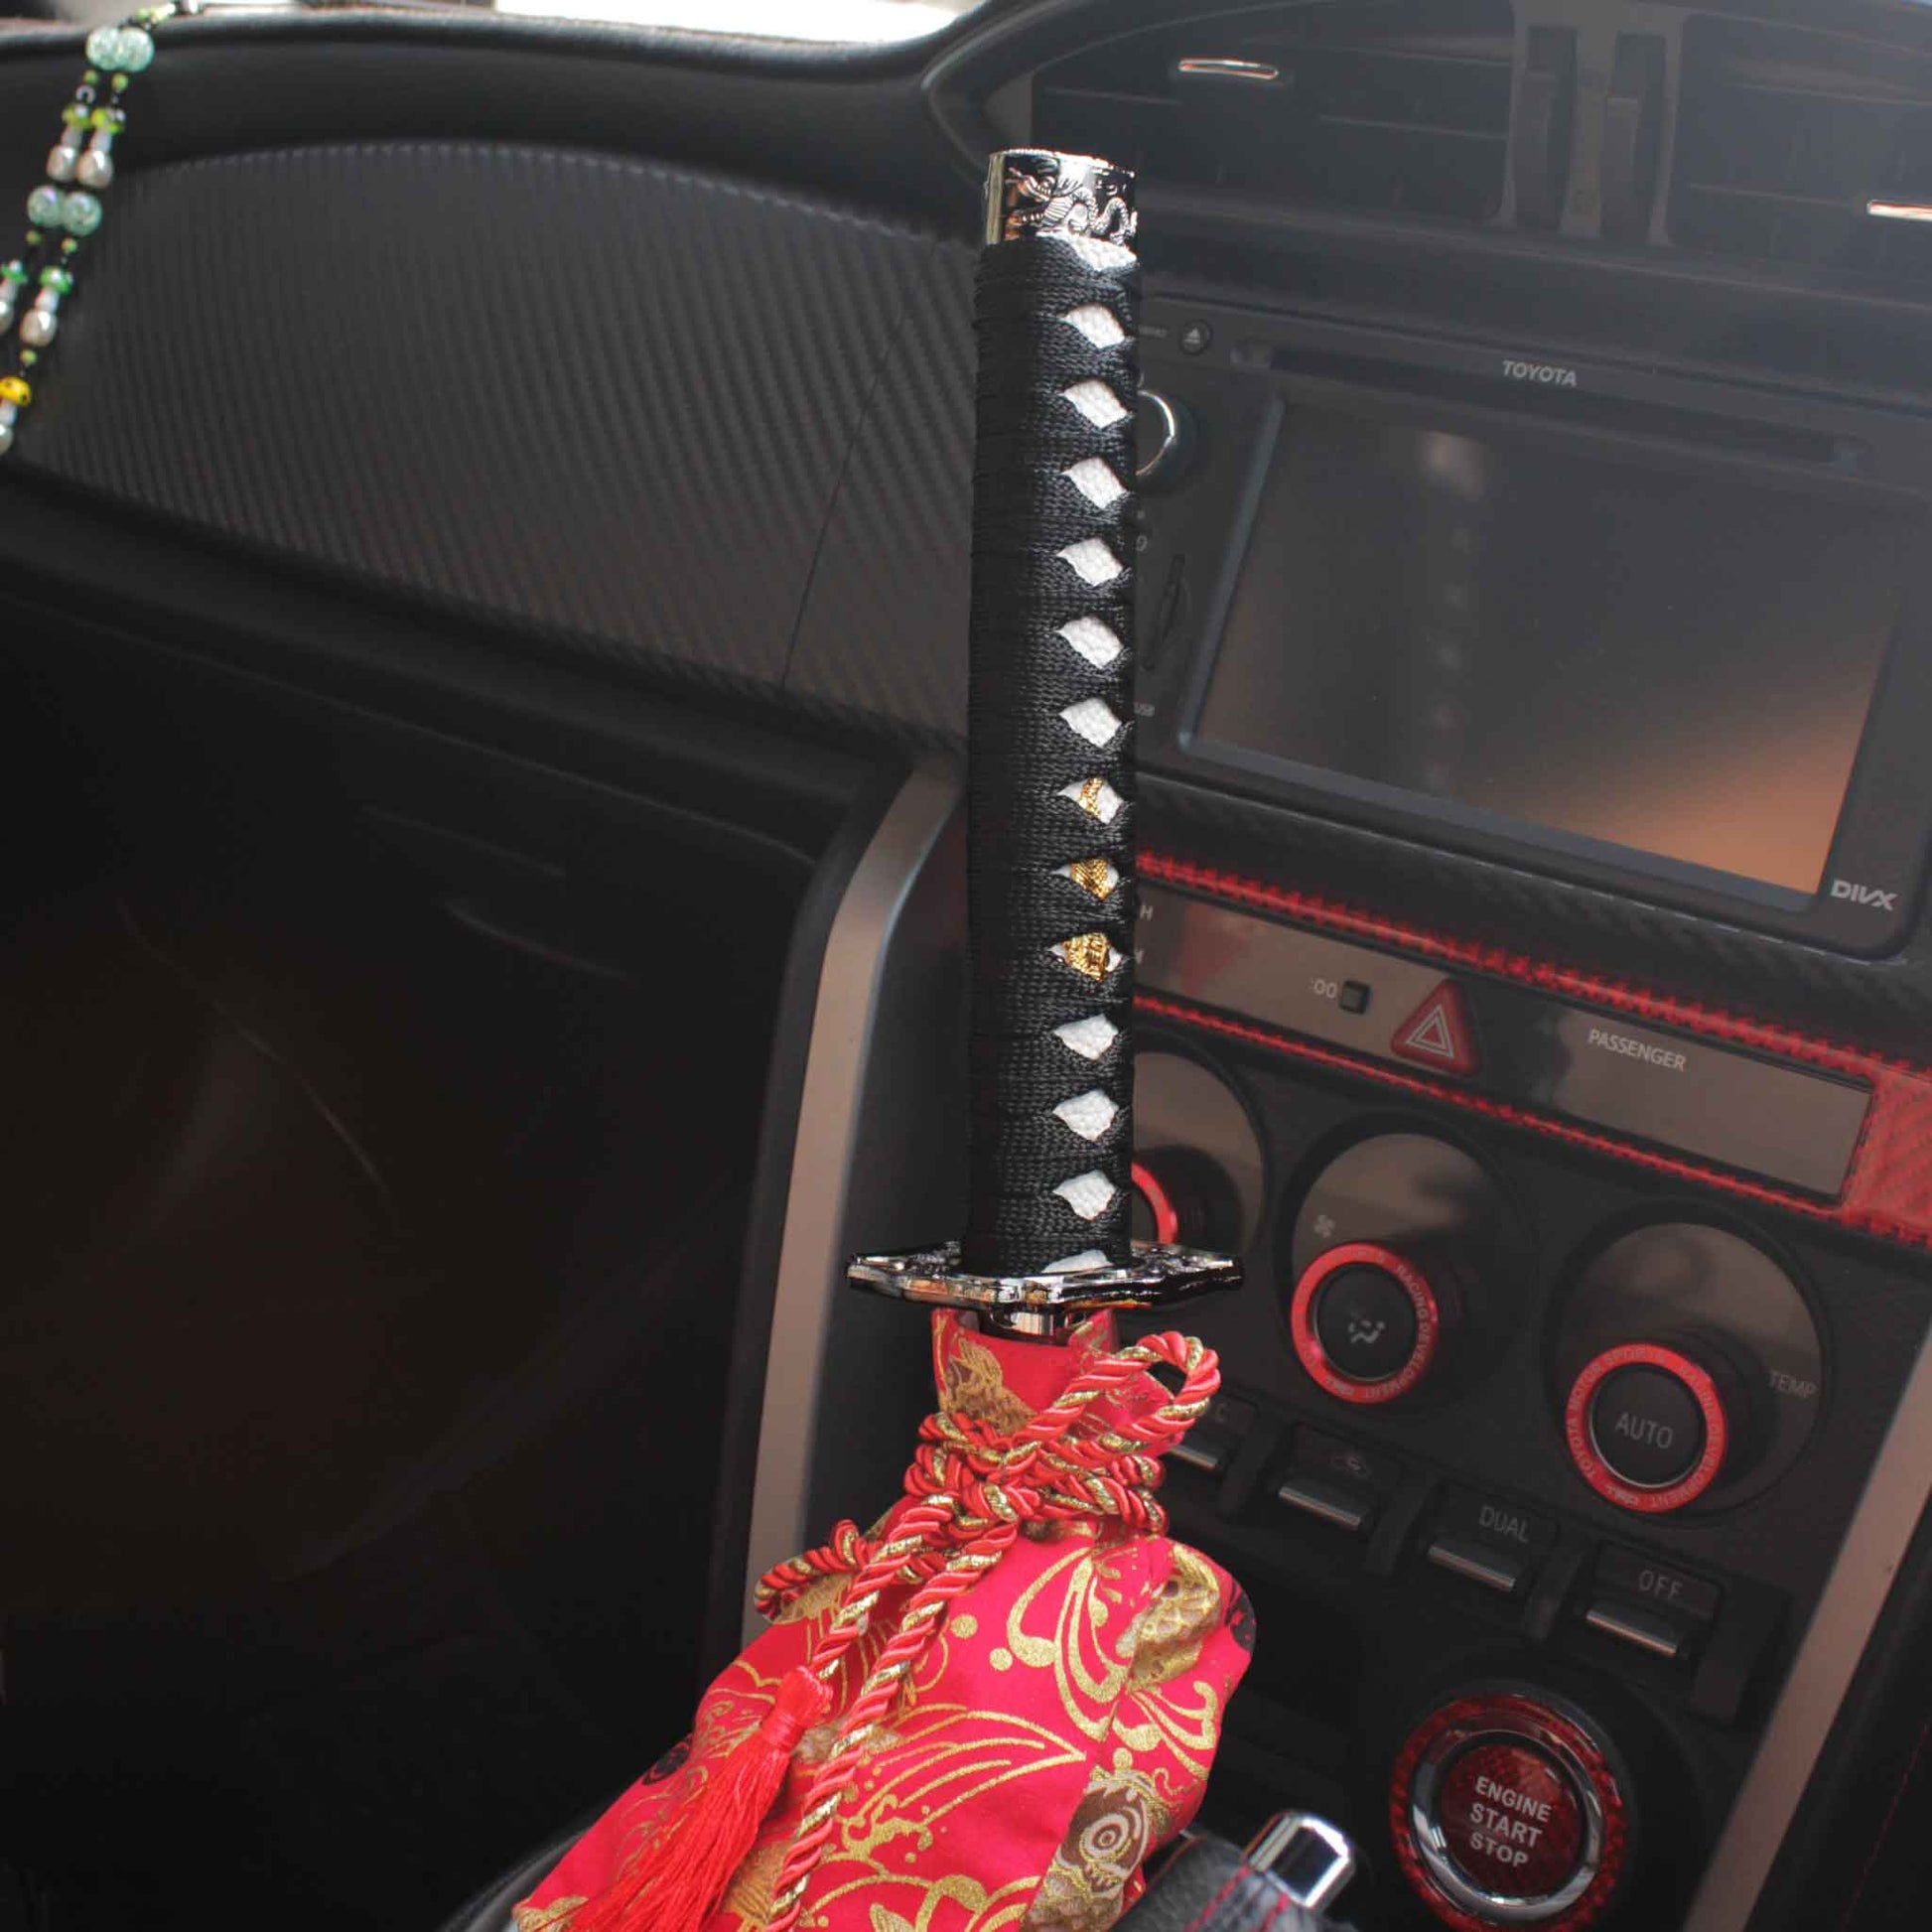 Katana Samurai Shift Knob for Auto & Manual Cars – Perfect Shift